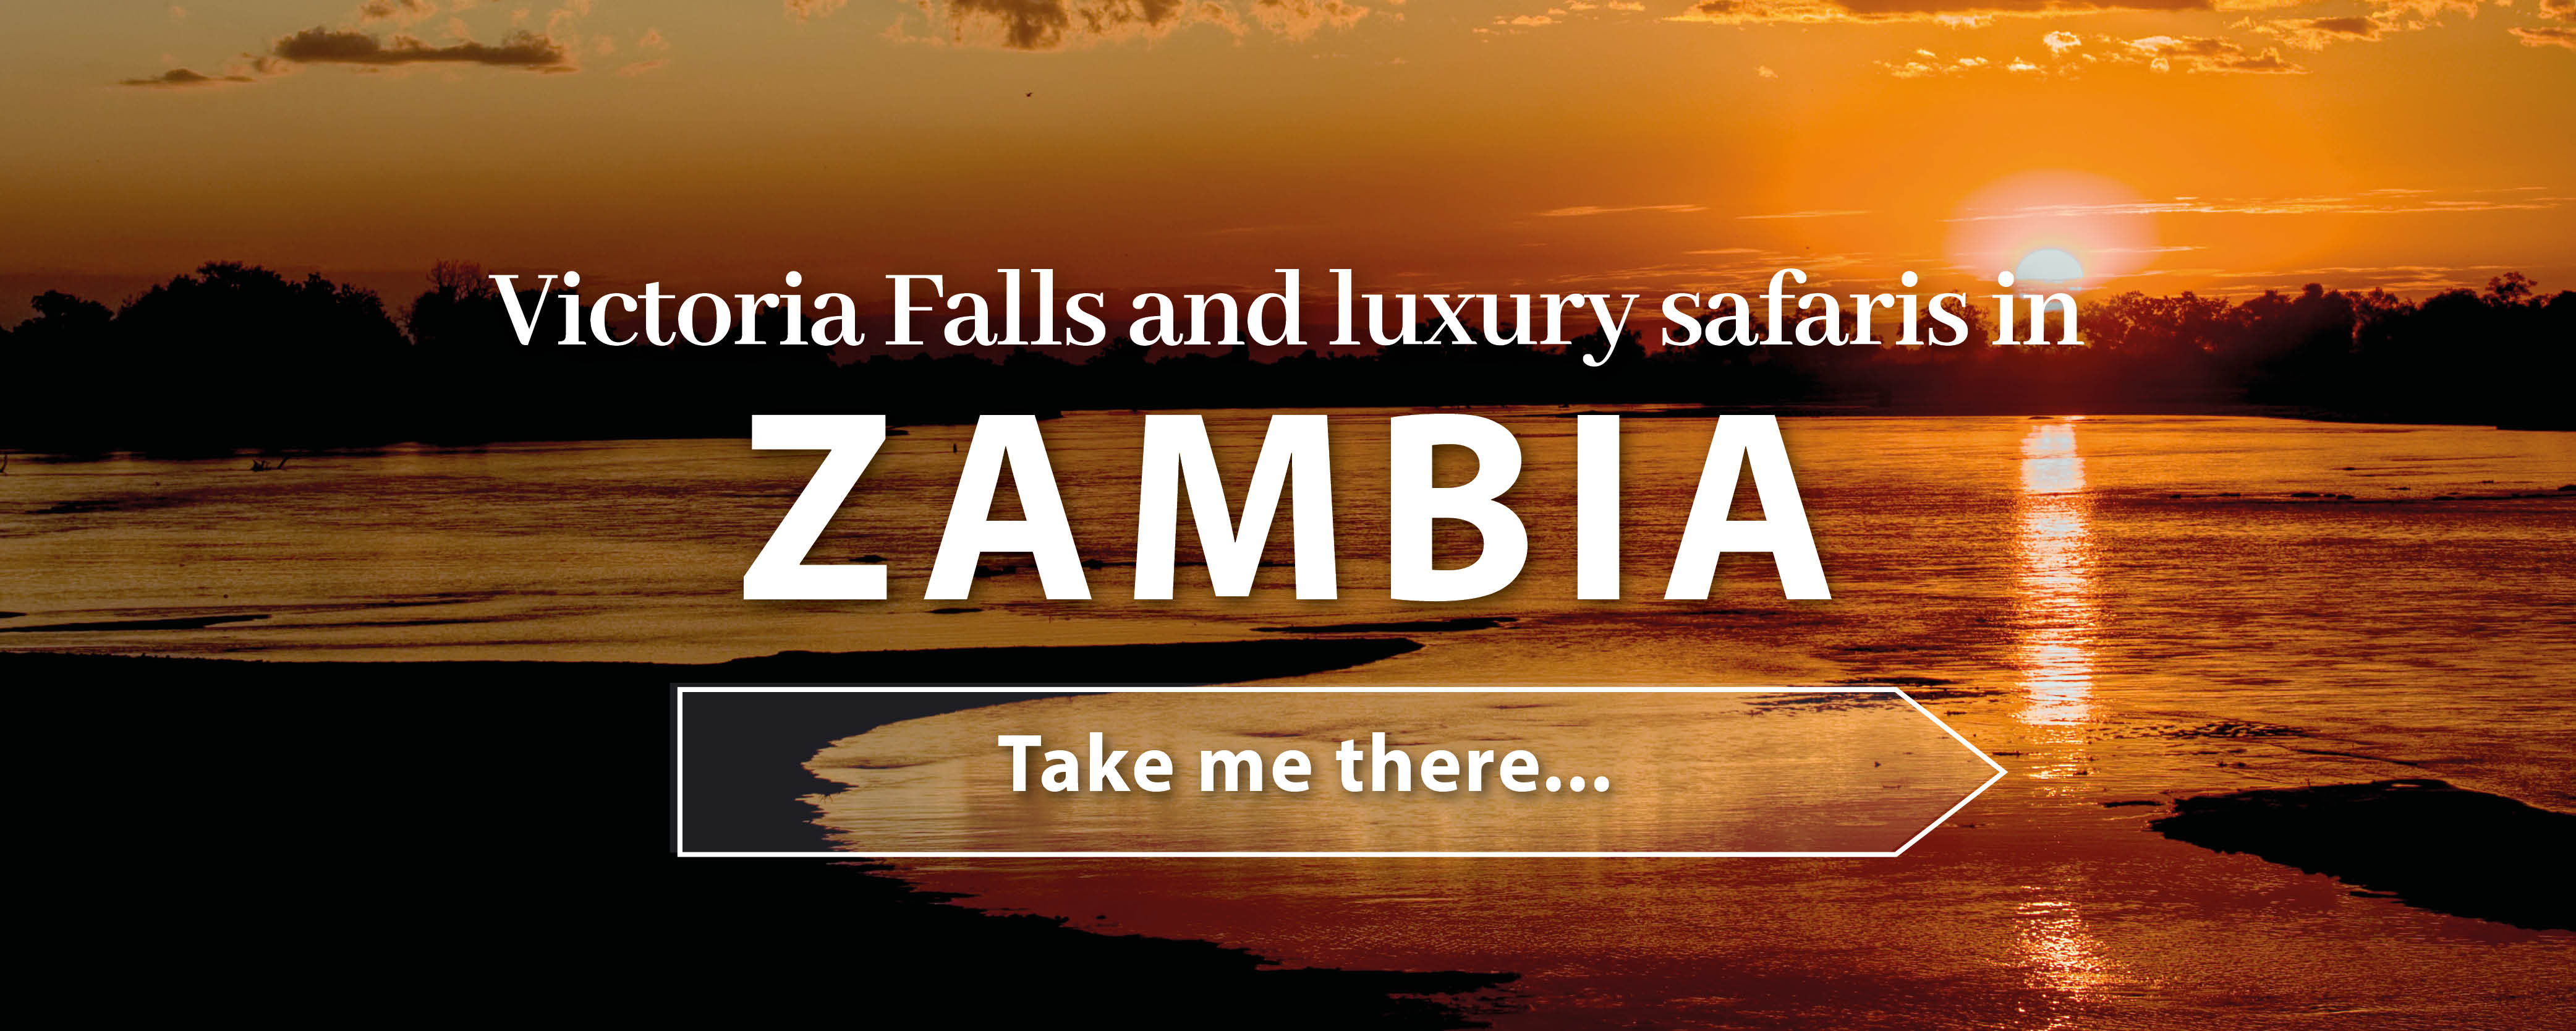 test free travel destinations Zambia